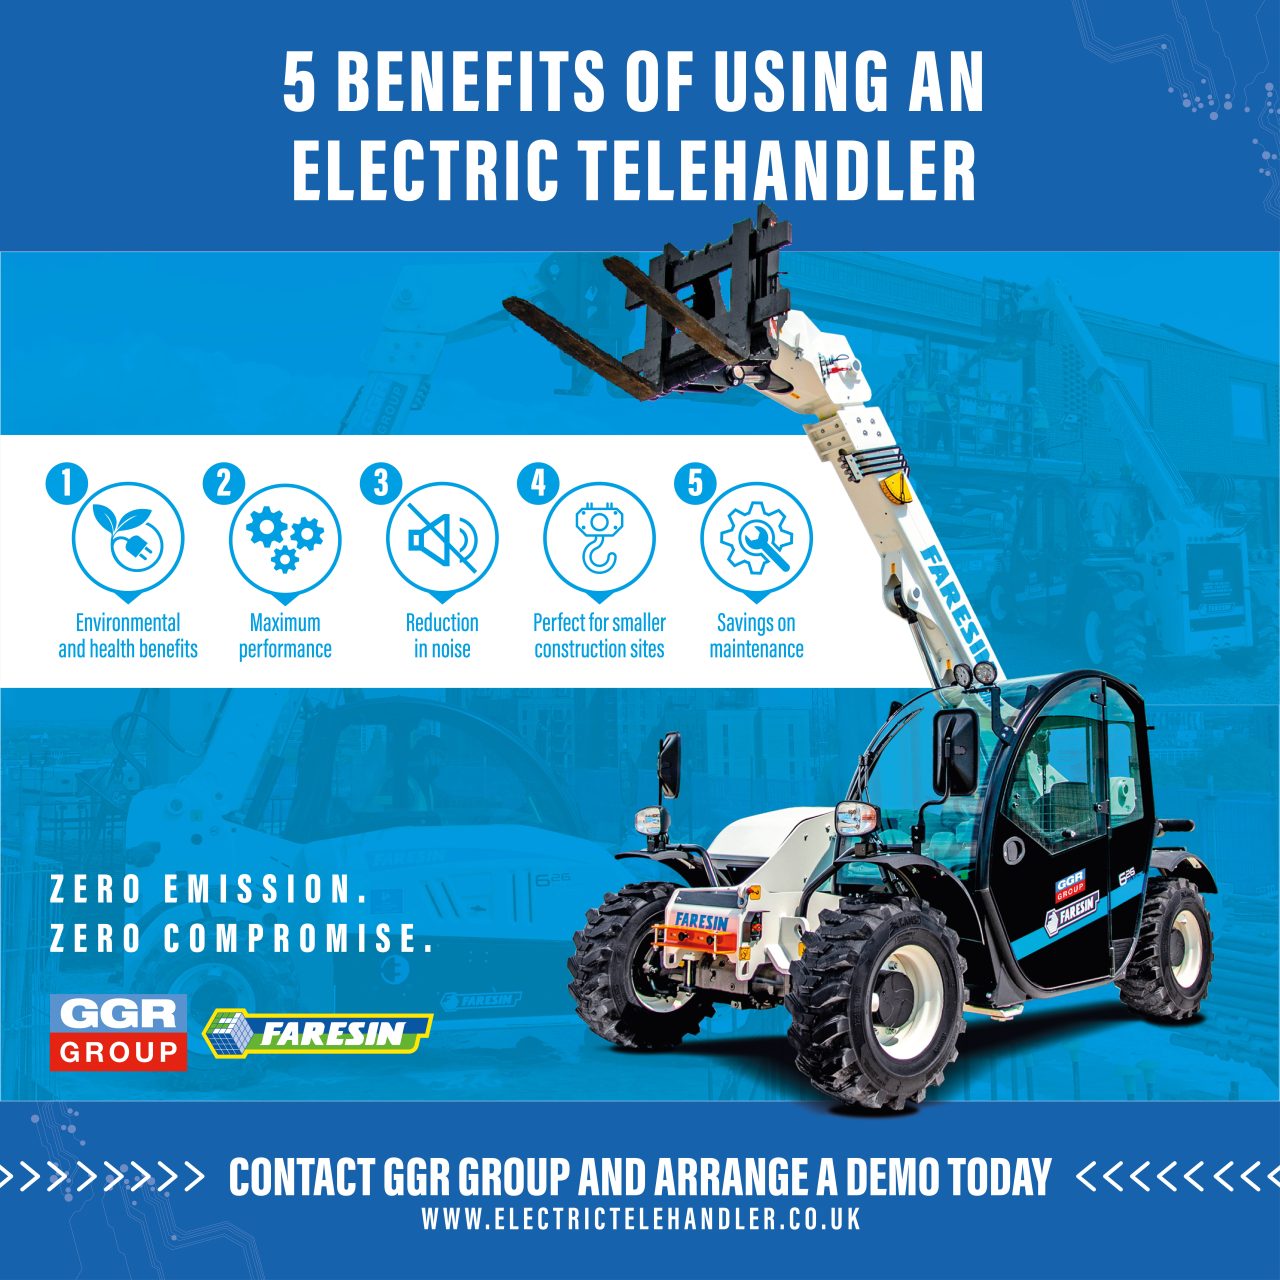 https://electrictelehandler.co.uk/wp-content/uploads/2022/03/5-Benefits-Telehandler-v2-002-1280x1280.jpg